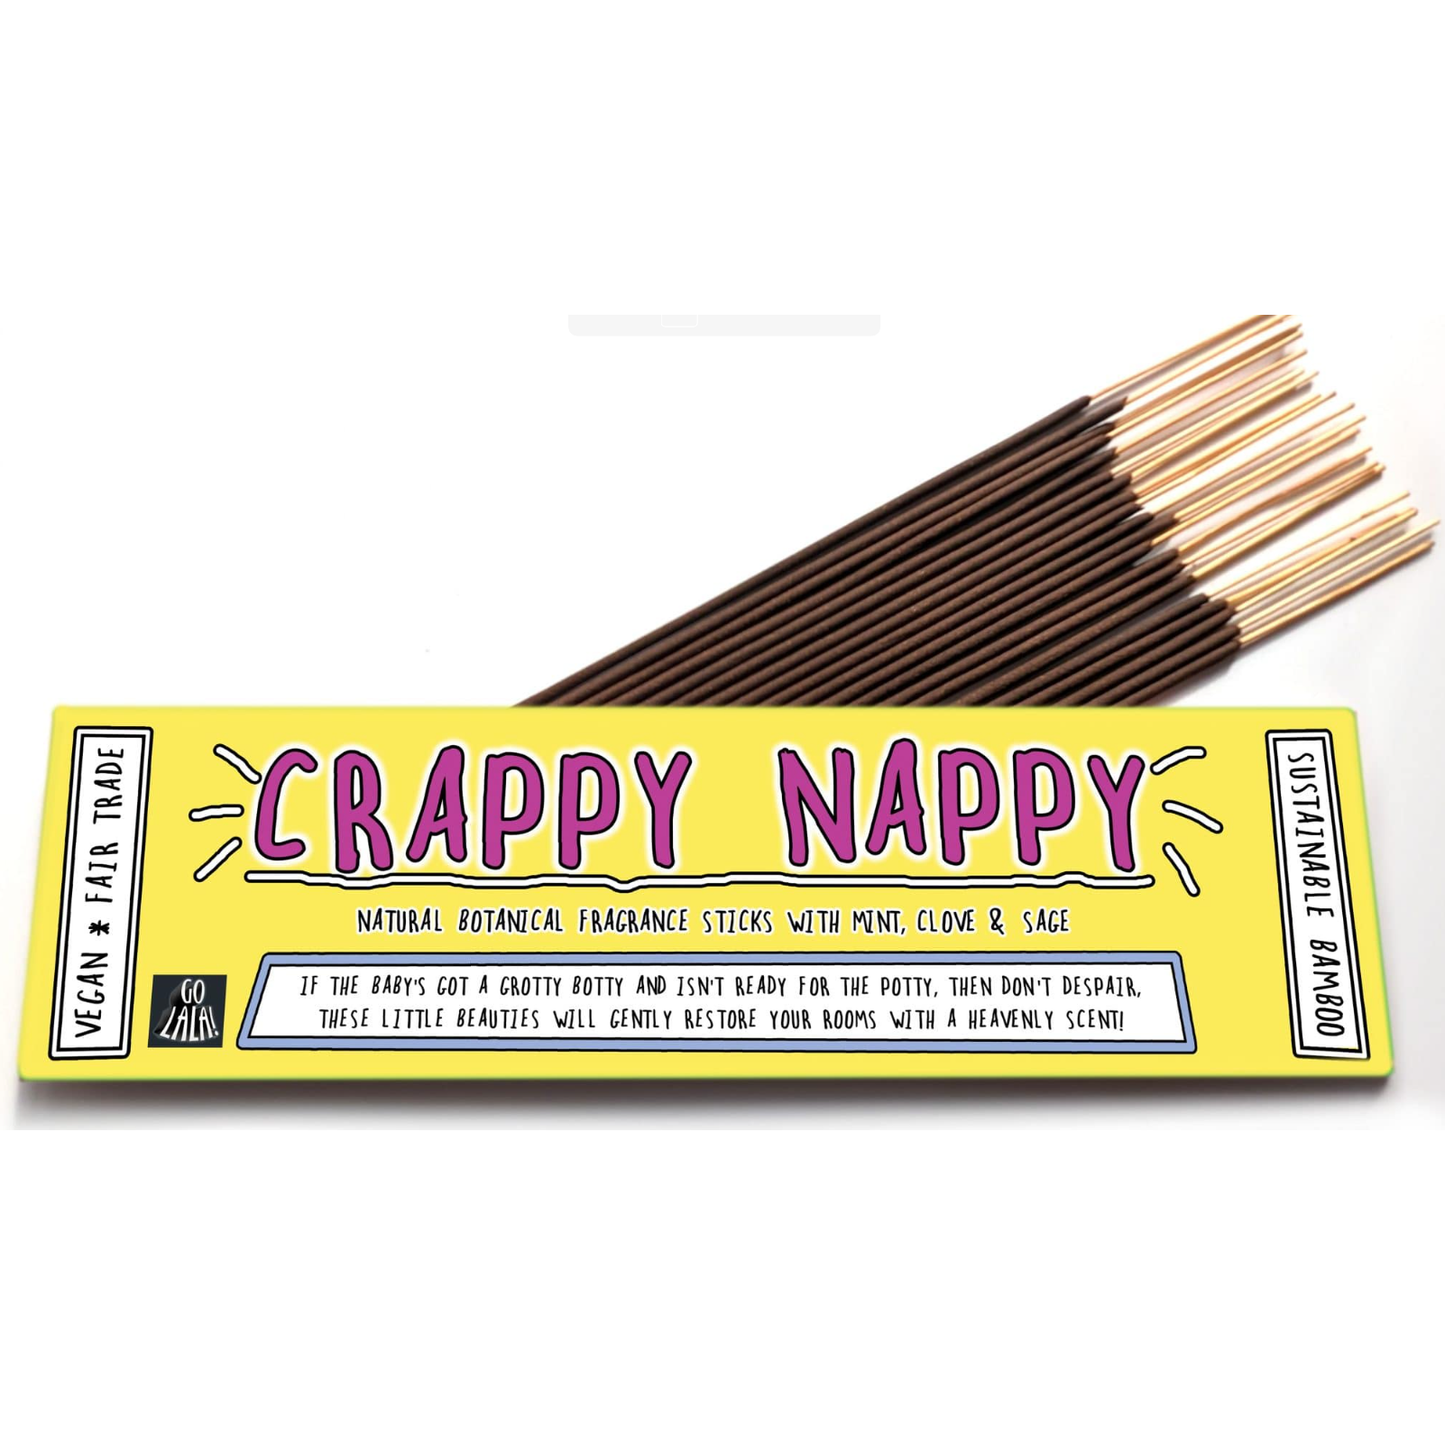 Fragrance Sticks - Crappy Nappy Funny Smells - 20 Sticks per Pack